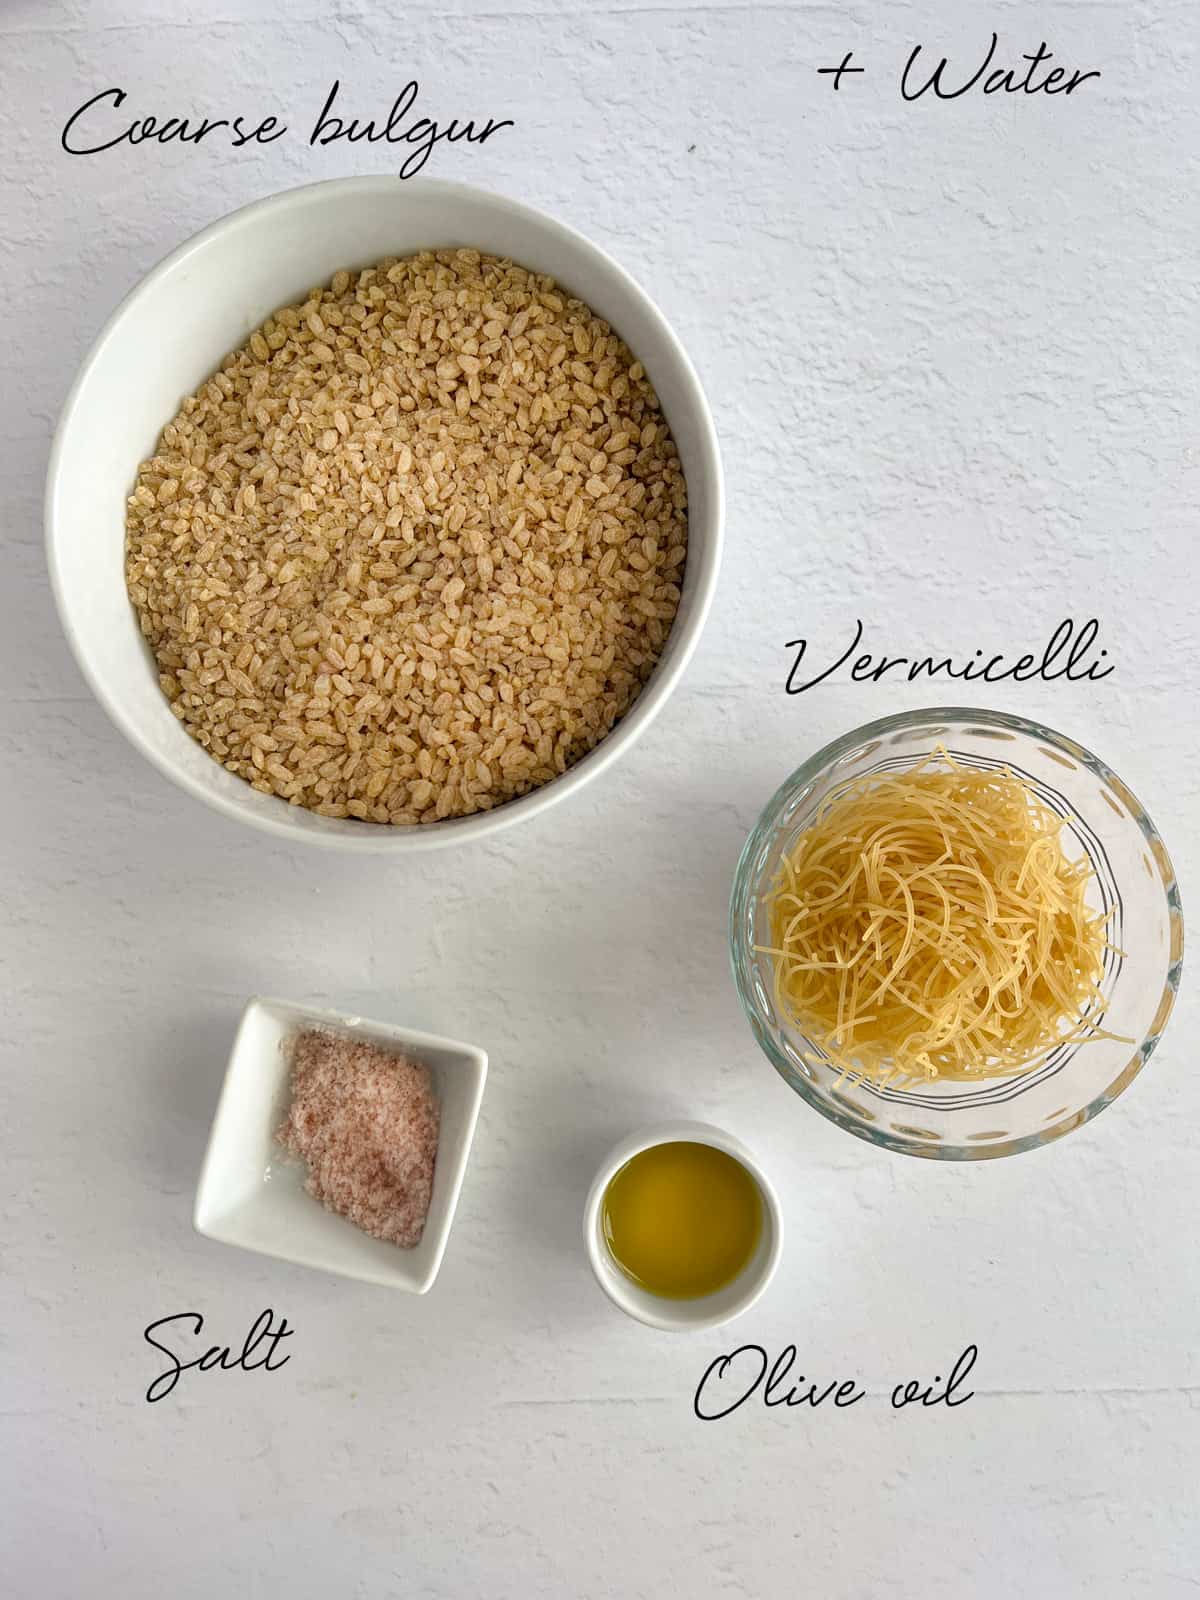 coarse bulgur, vermicelli, salt, olive oil in white bowls